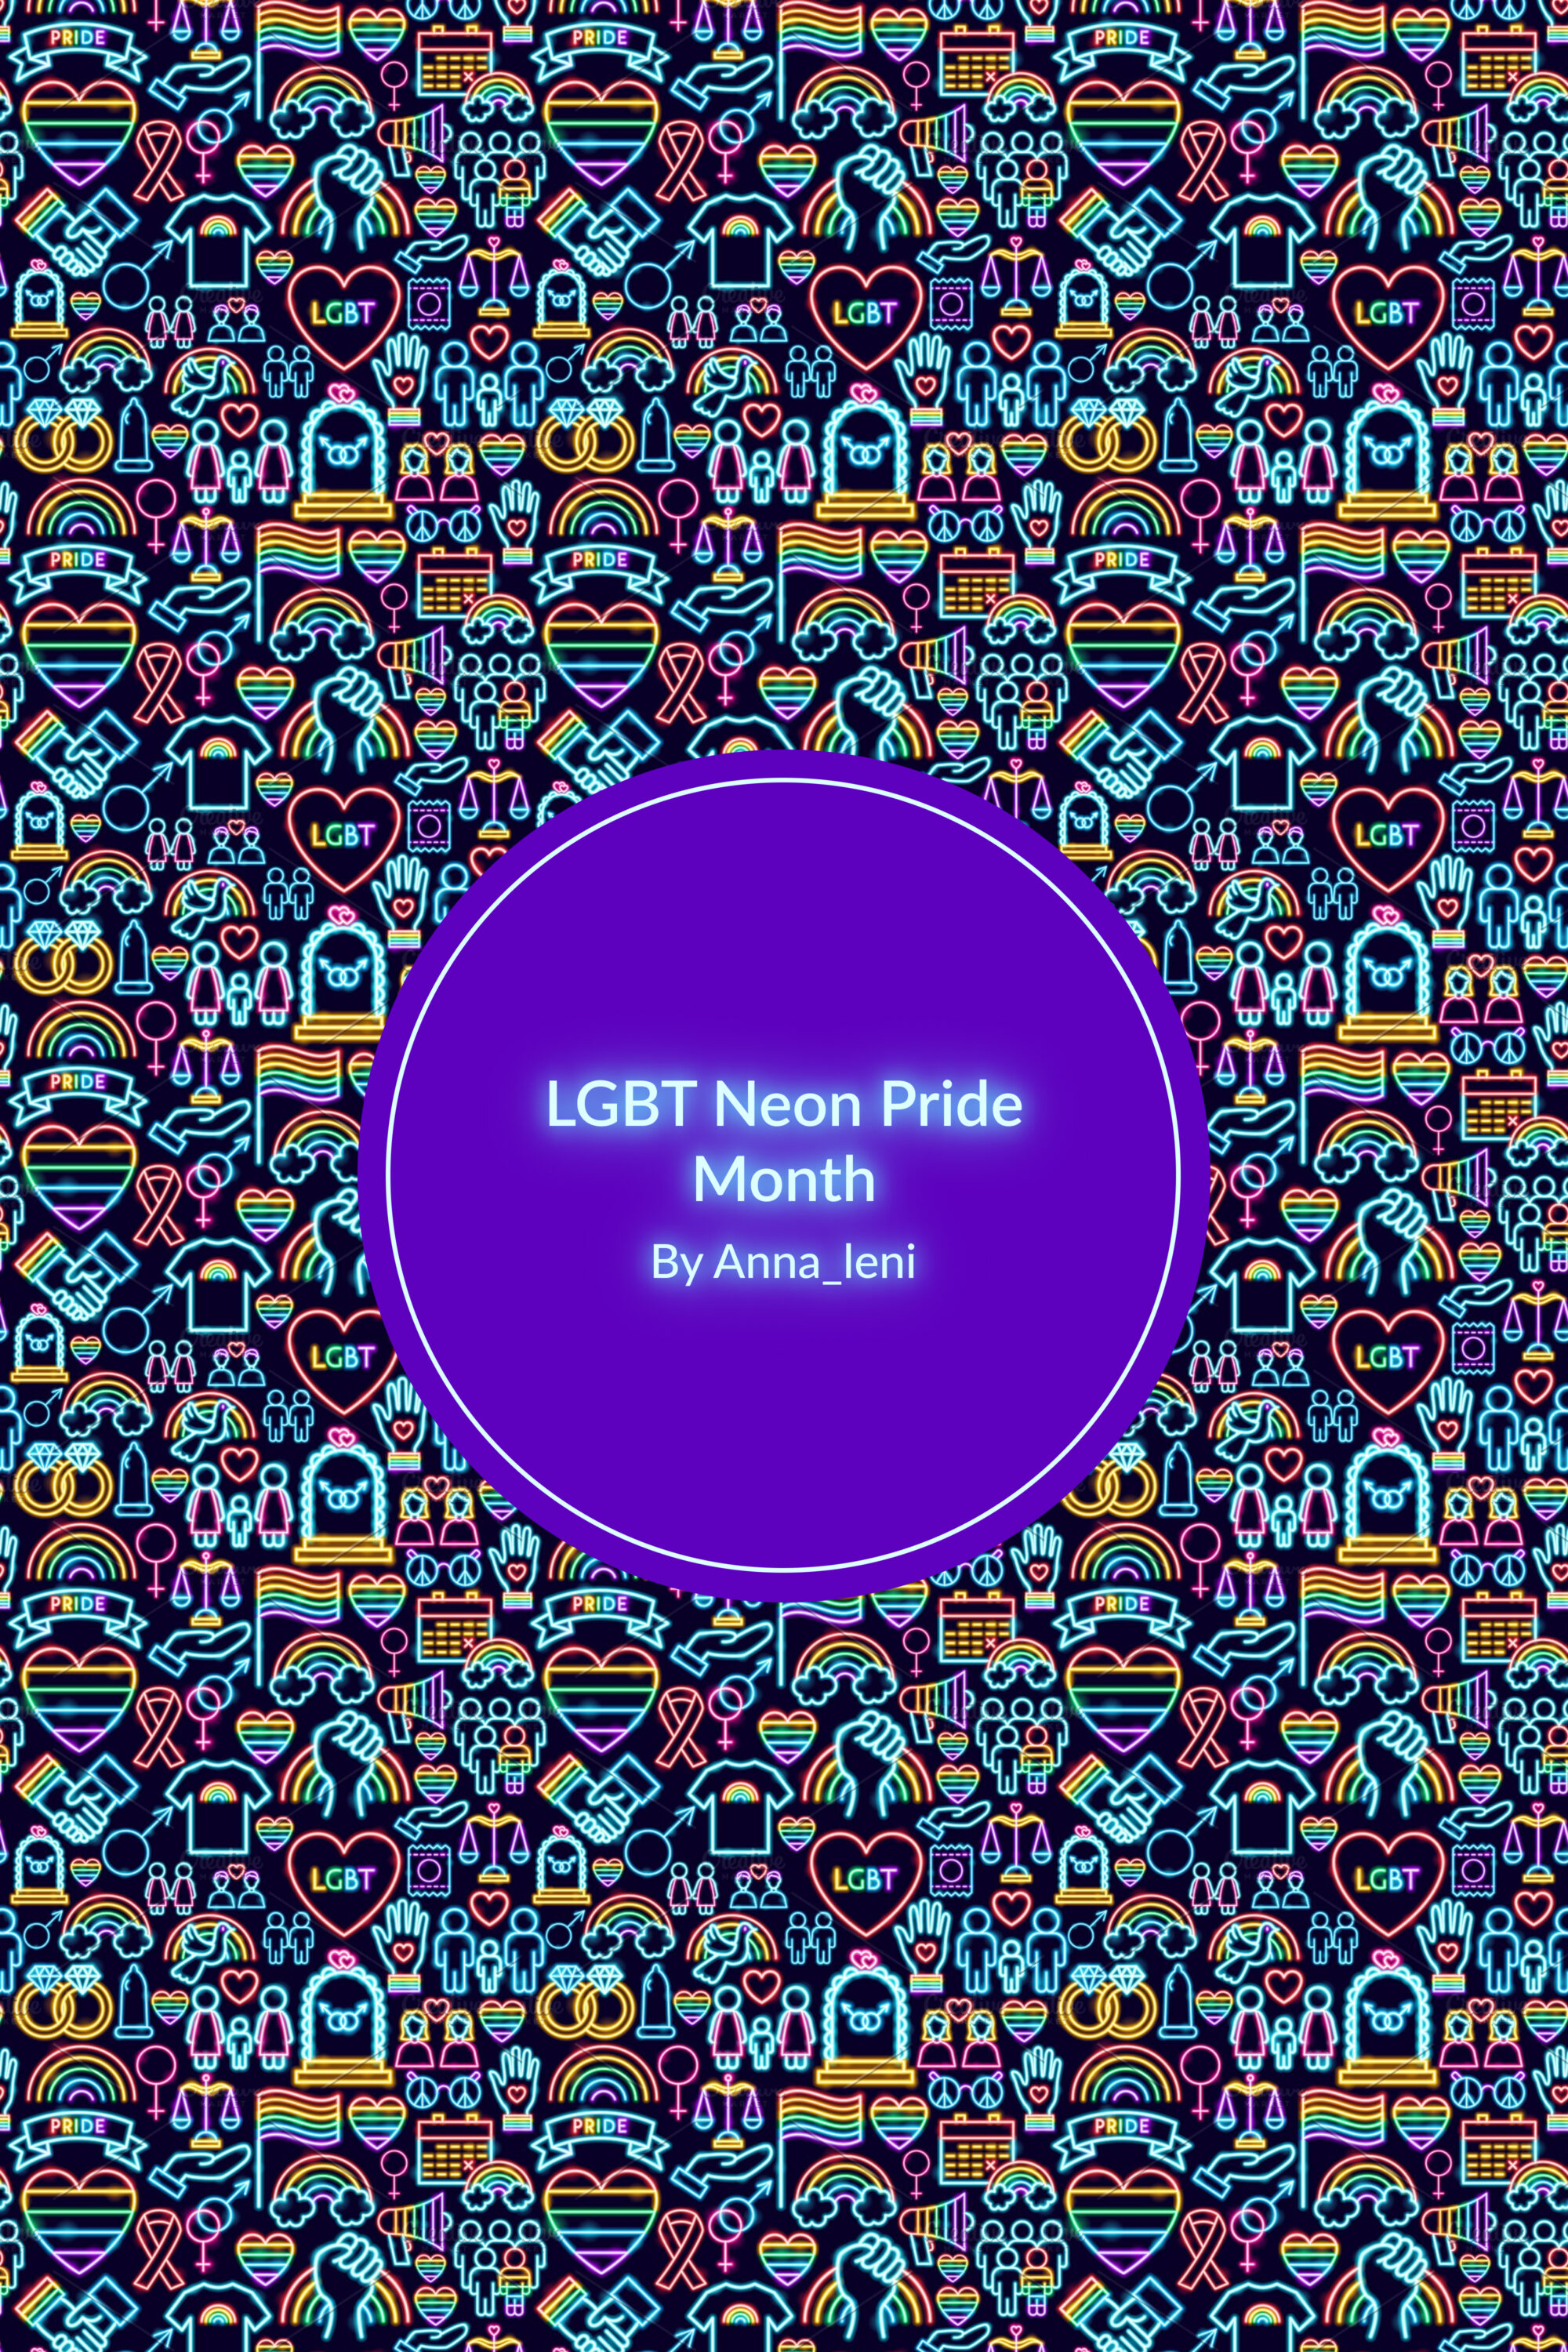 LGBT neon pride month of pinterest.